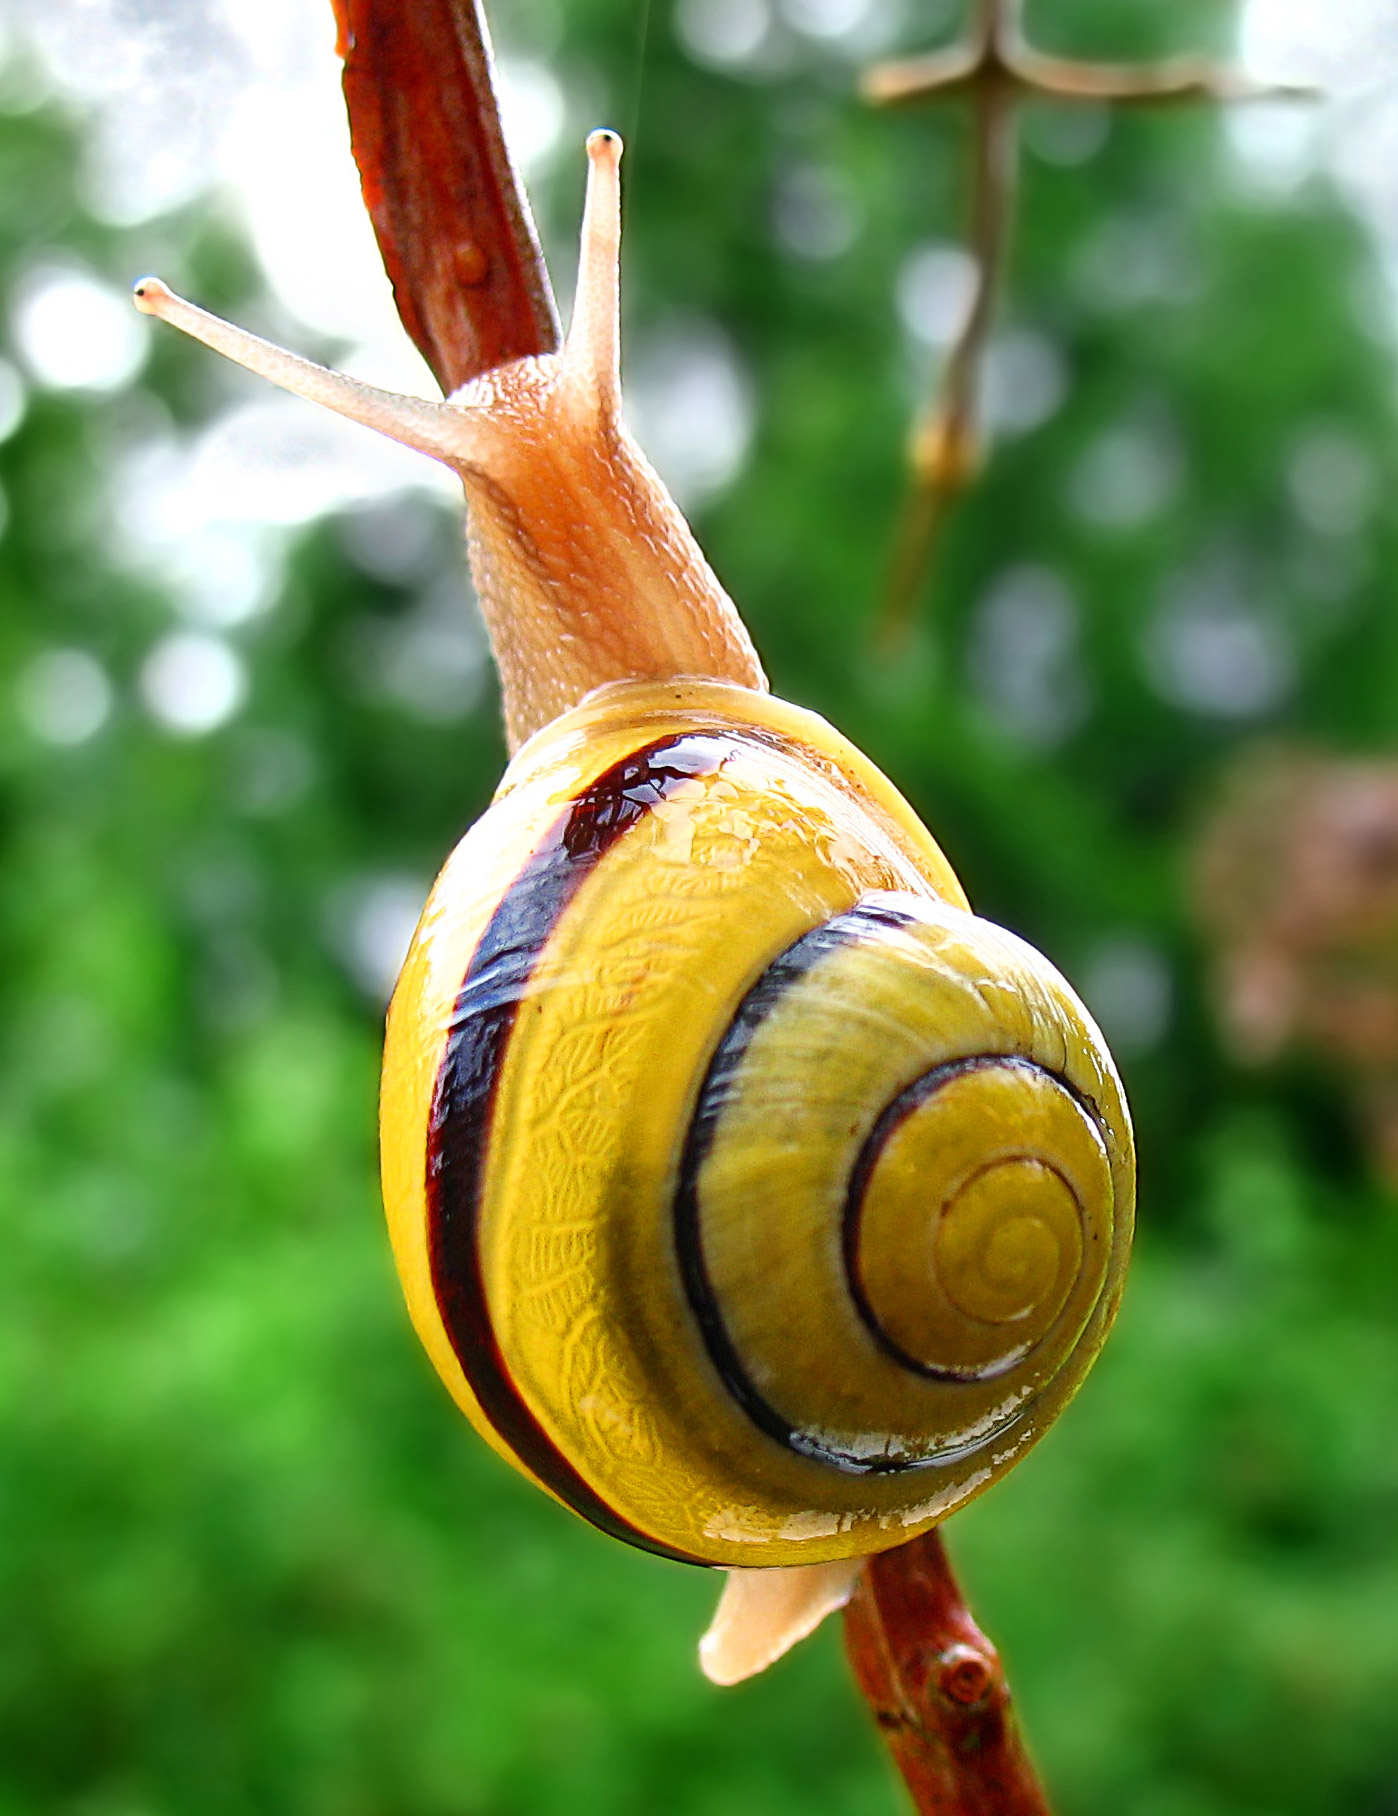 Grove snail - Wikipedia